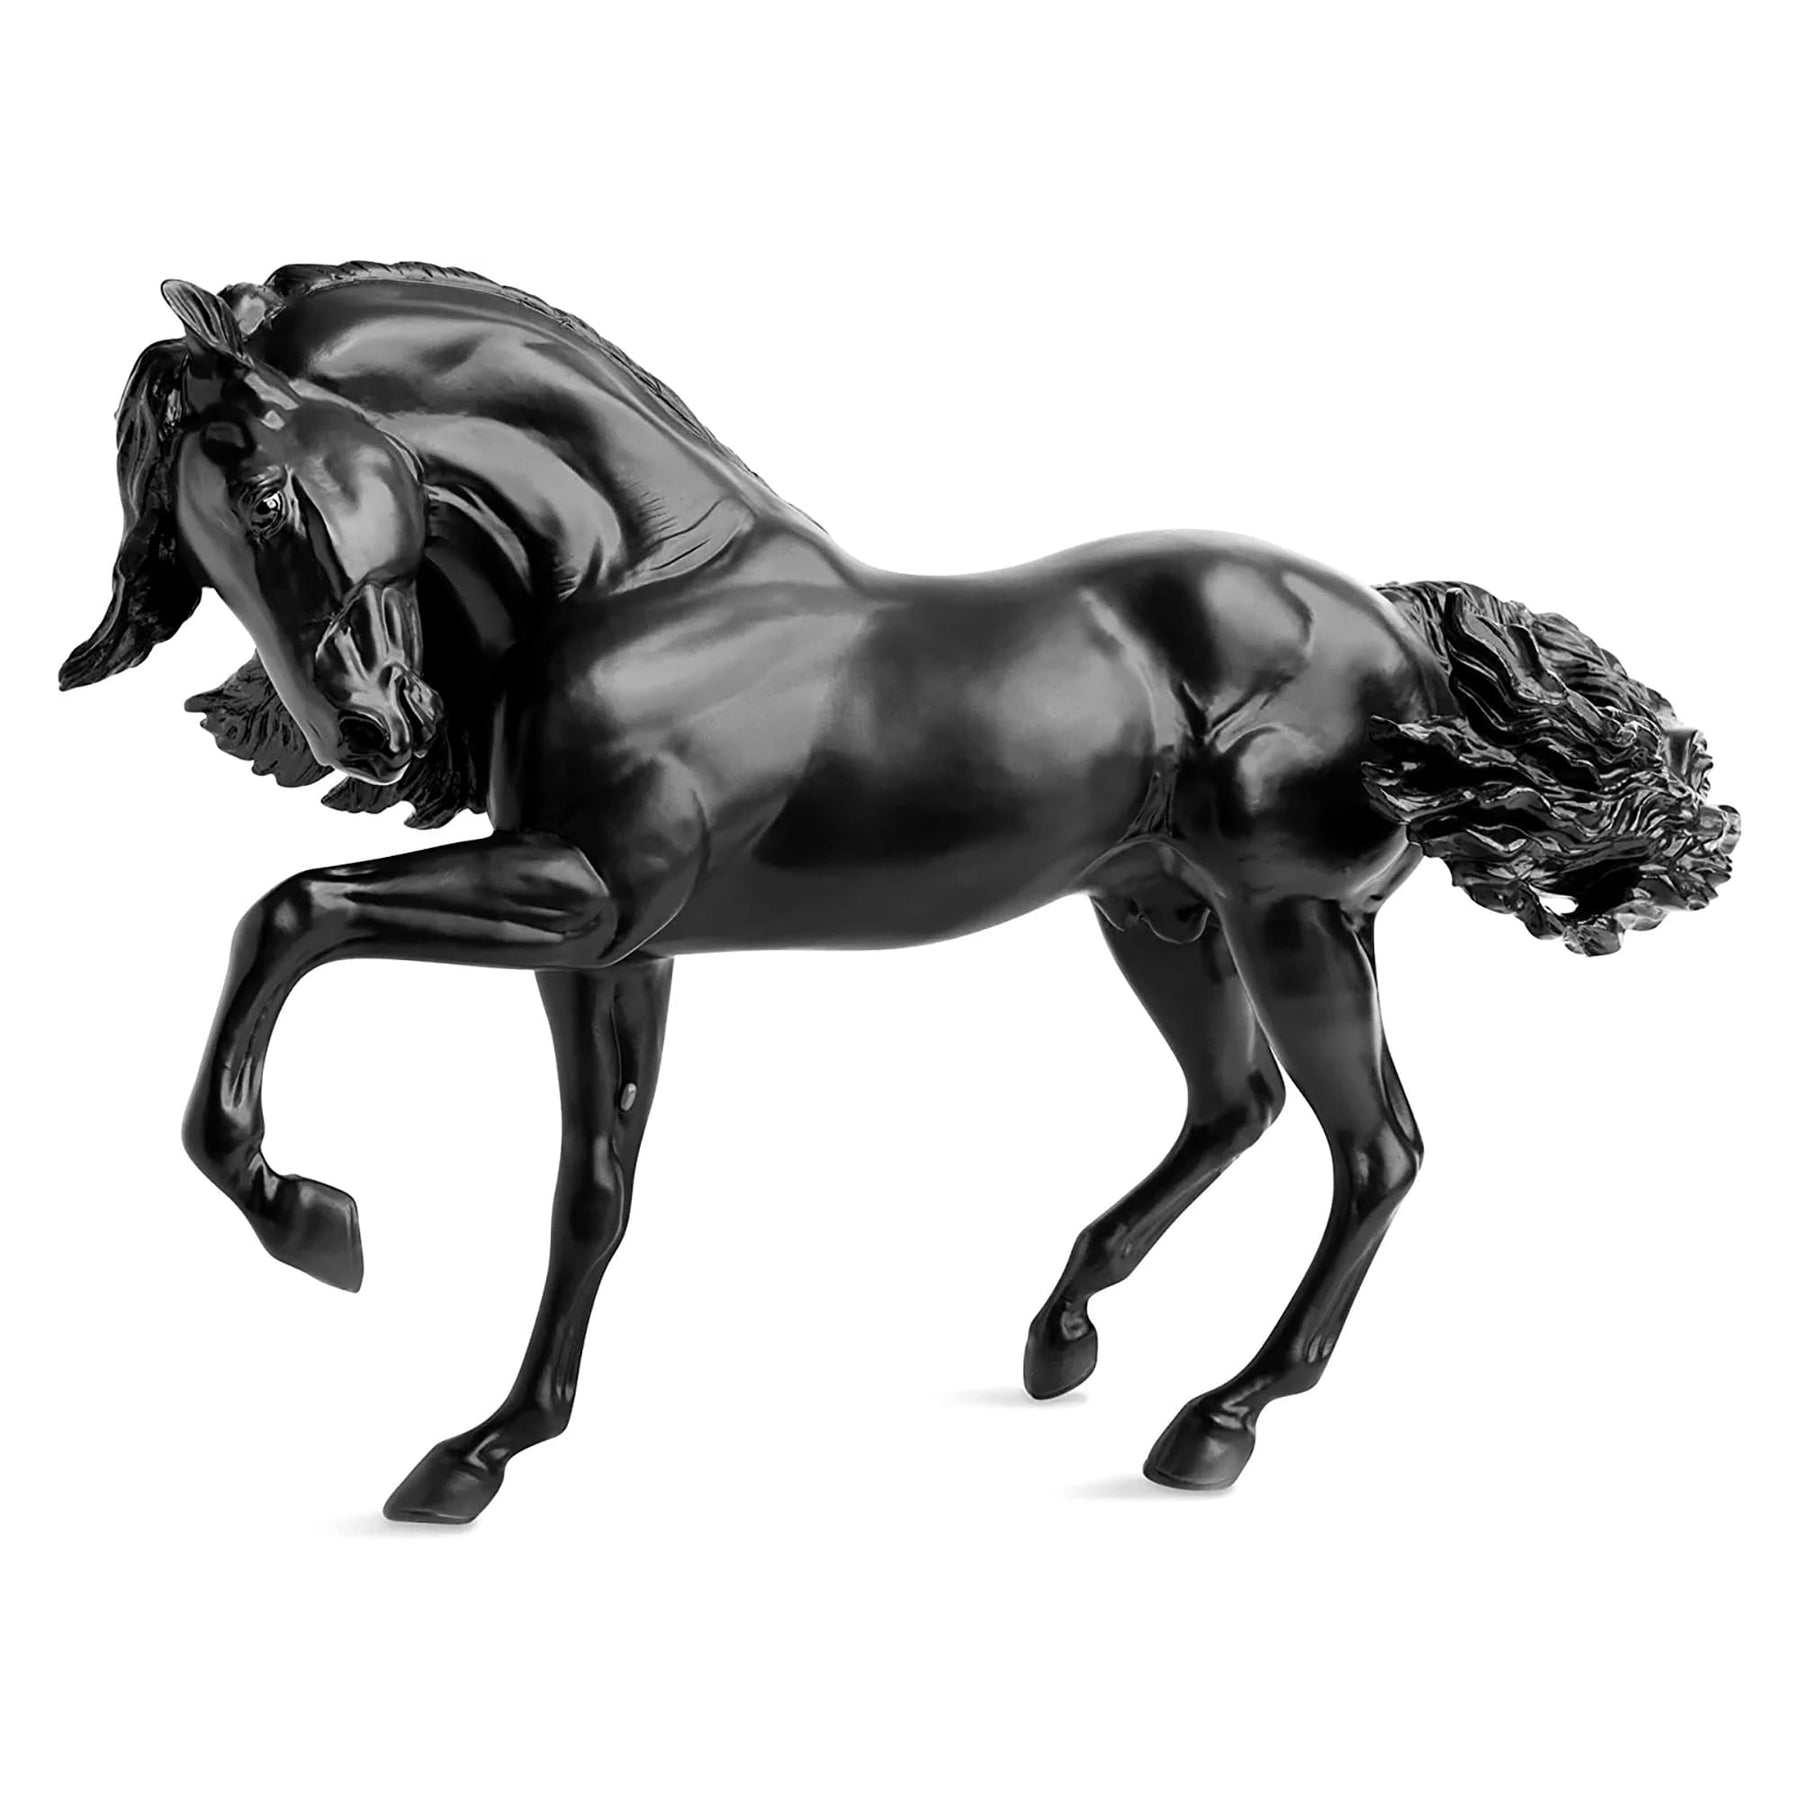 Breyer Traditional 1:9 Scale Model Horse | Sjoerd